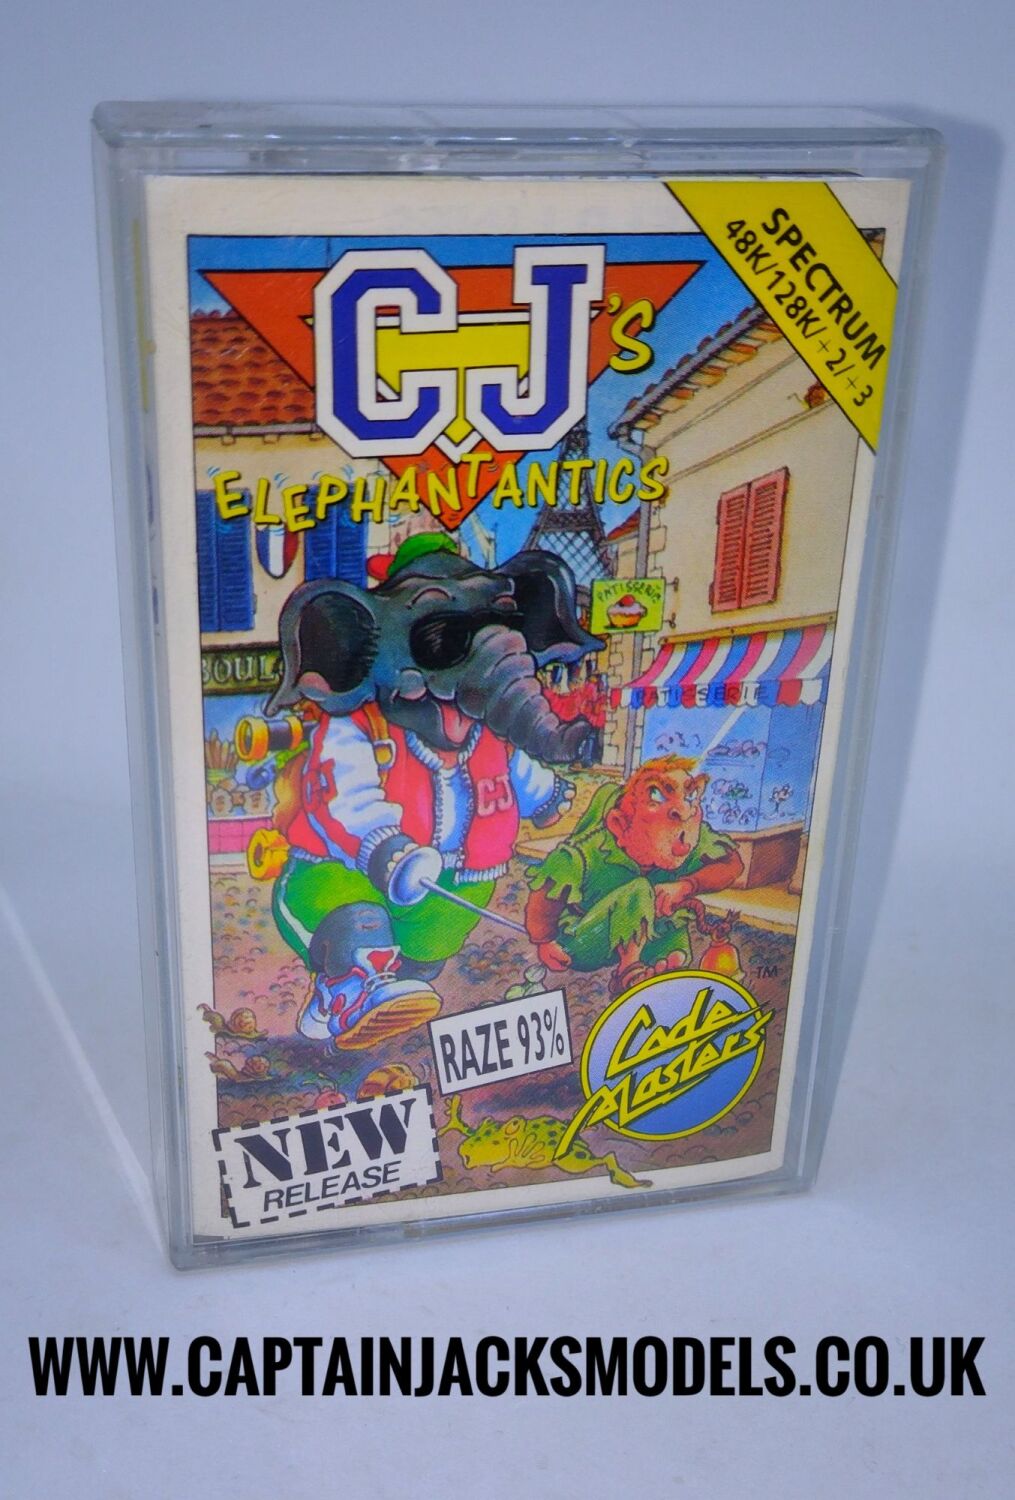 CJs Elephant Antics Code Masters Vintage ZX Spectrum 48K 128K +2 +3 Softwar